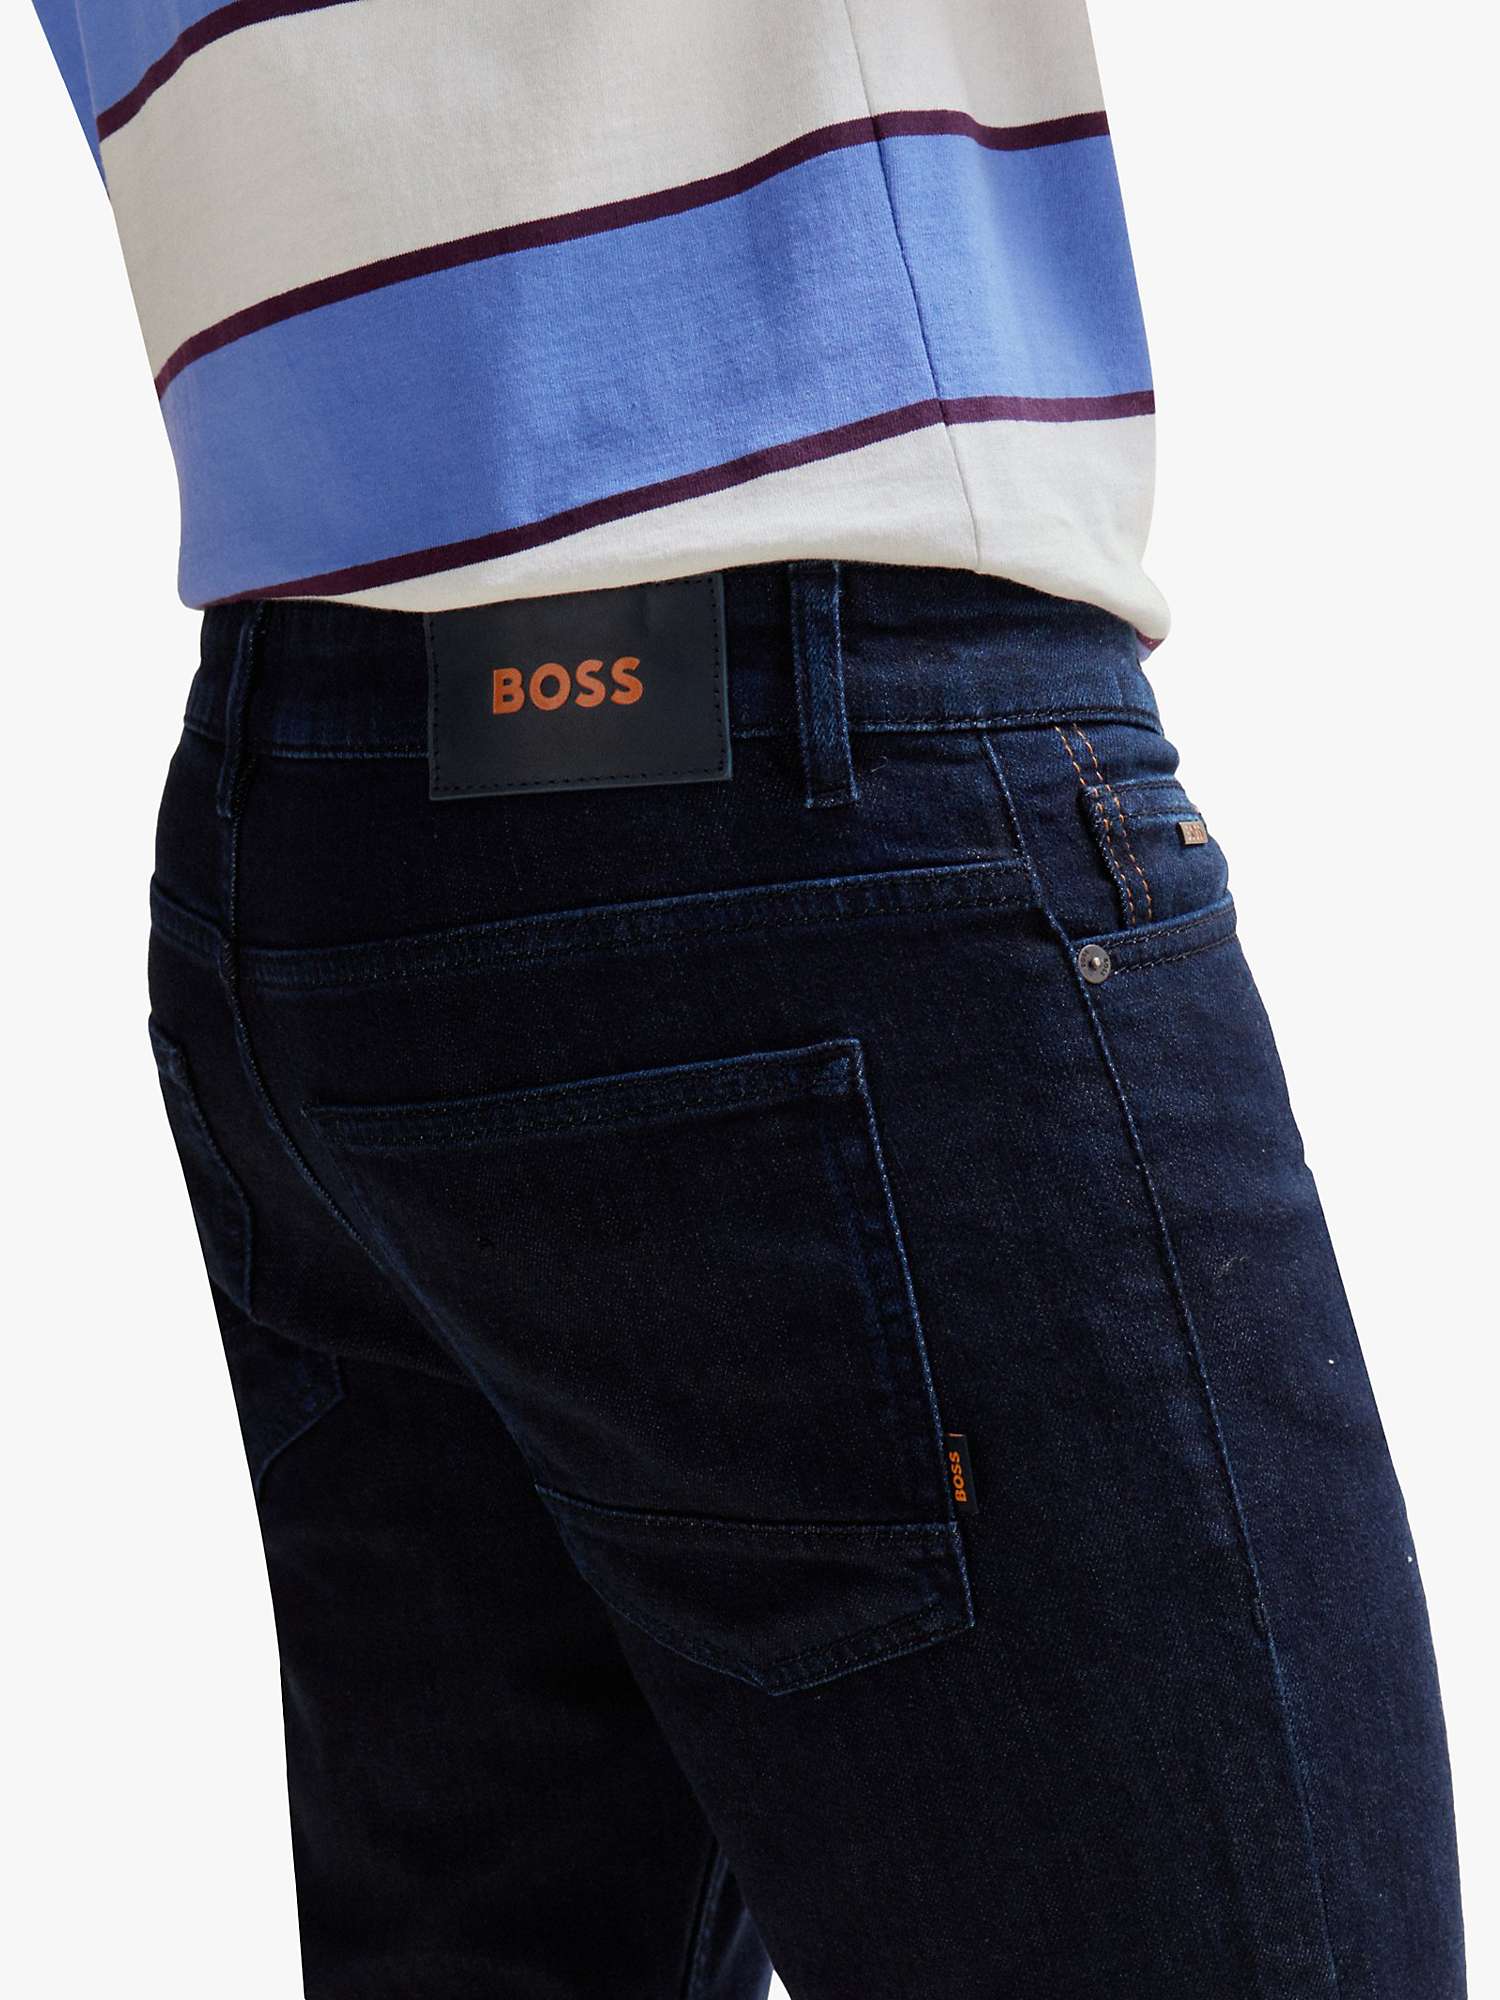 Buy Boss Delaware Slim Fit Jeans, Navy Online at johnlewis.com